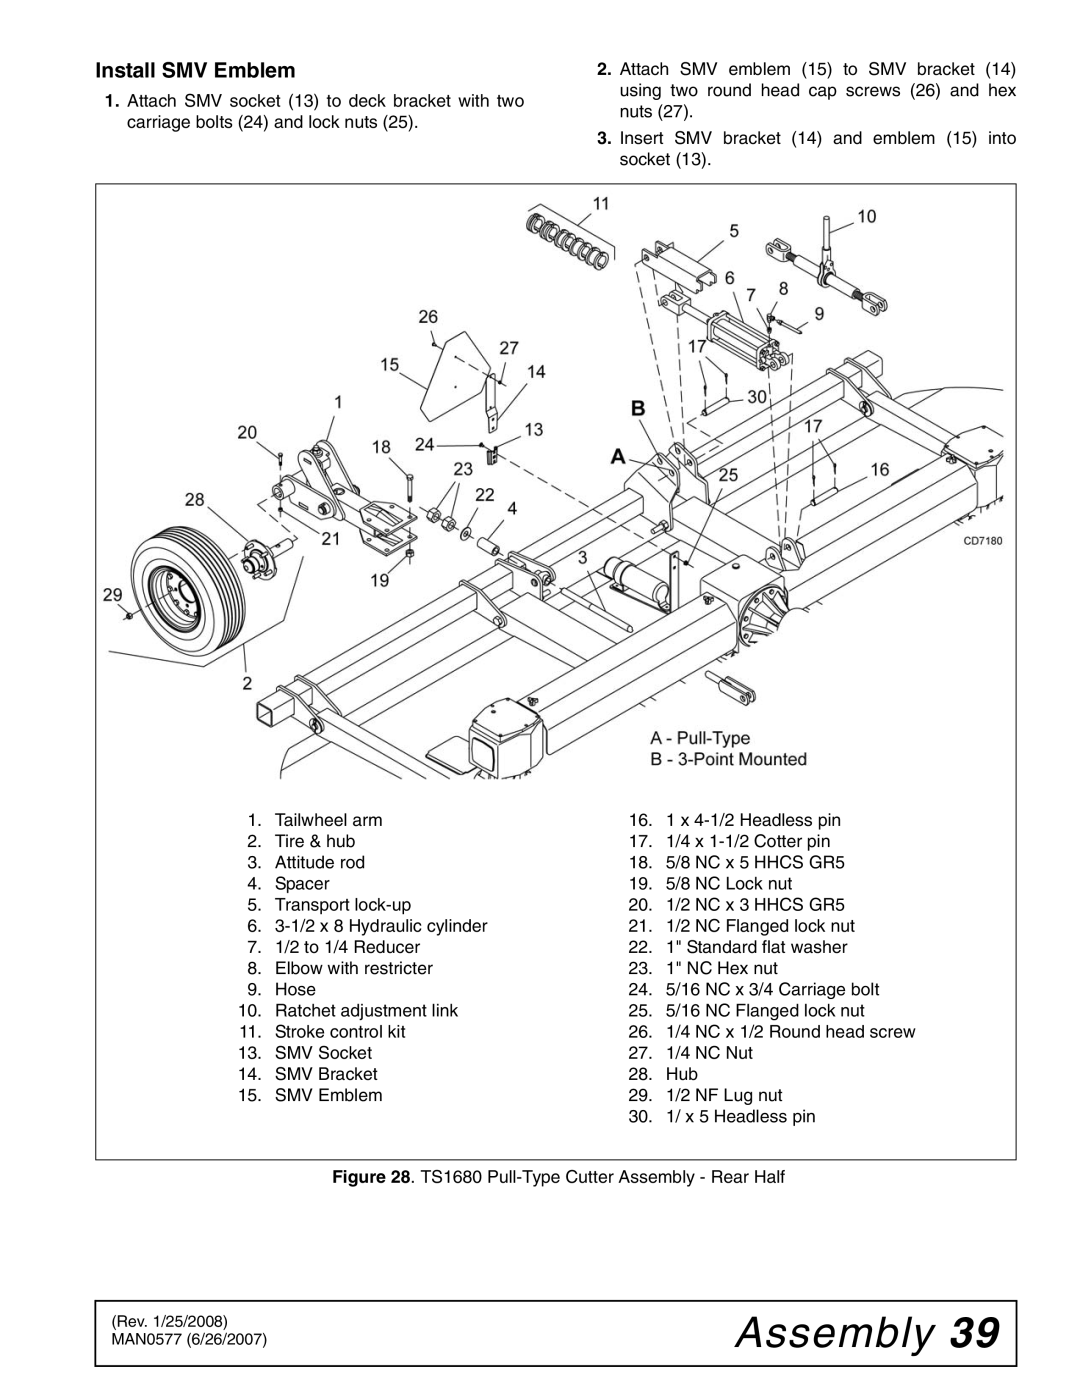 Woods Equipment TS1680Q manual Install SMV Emblem, TS1680 Pull-Type Cutter Assembly Rear Half 